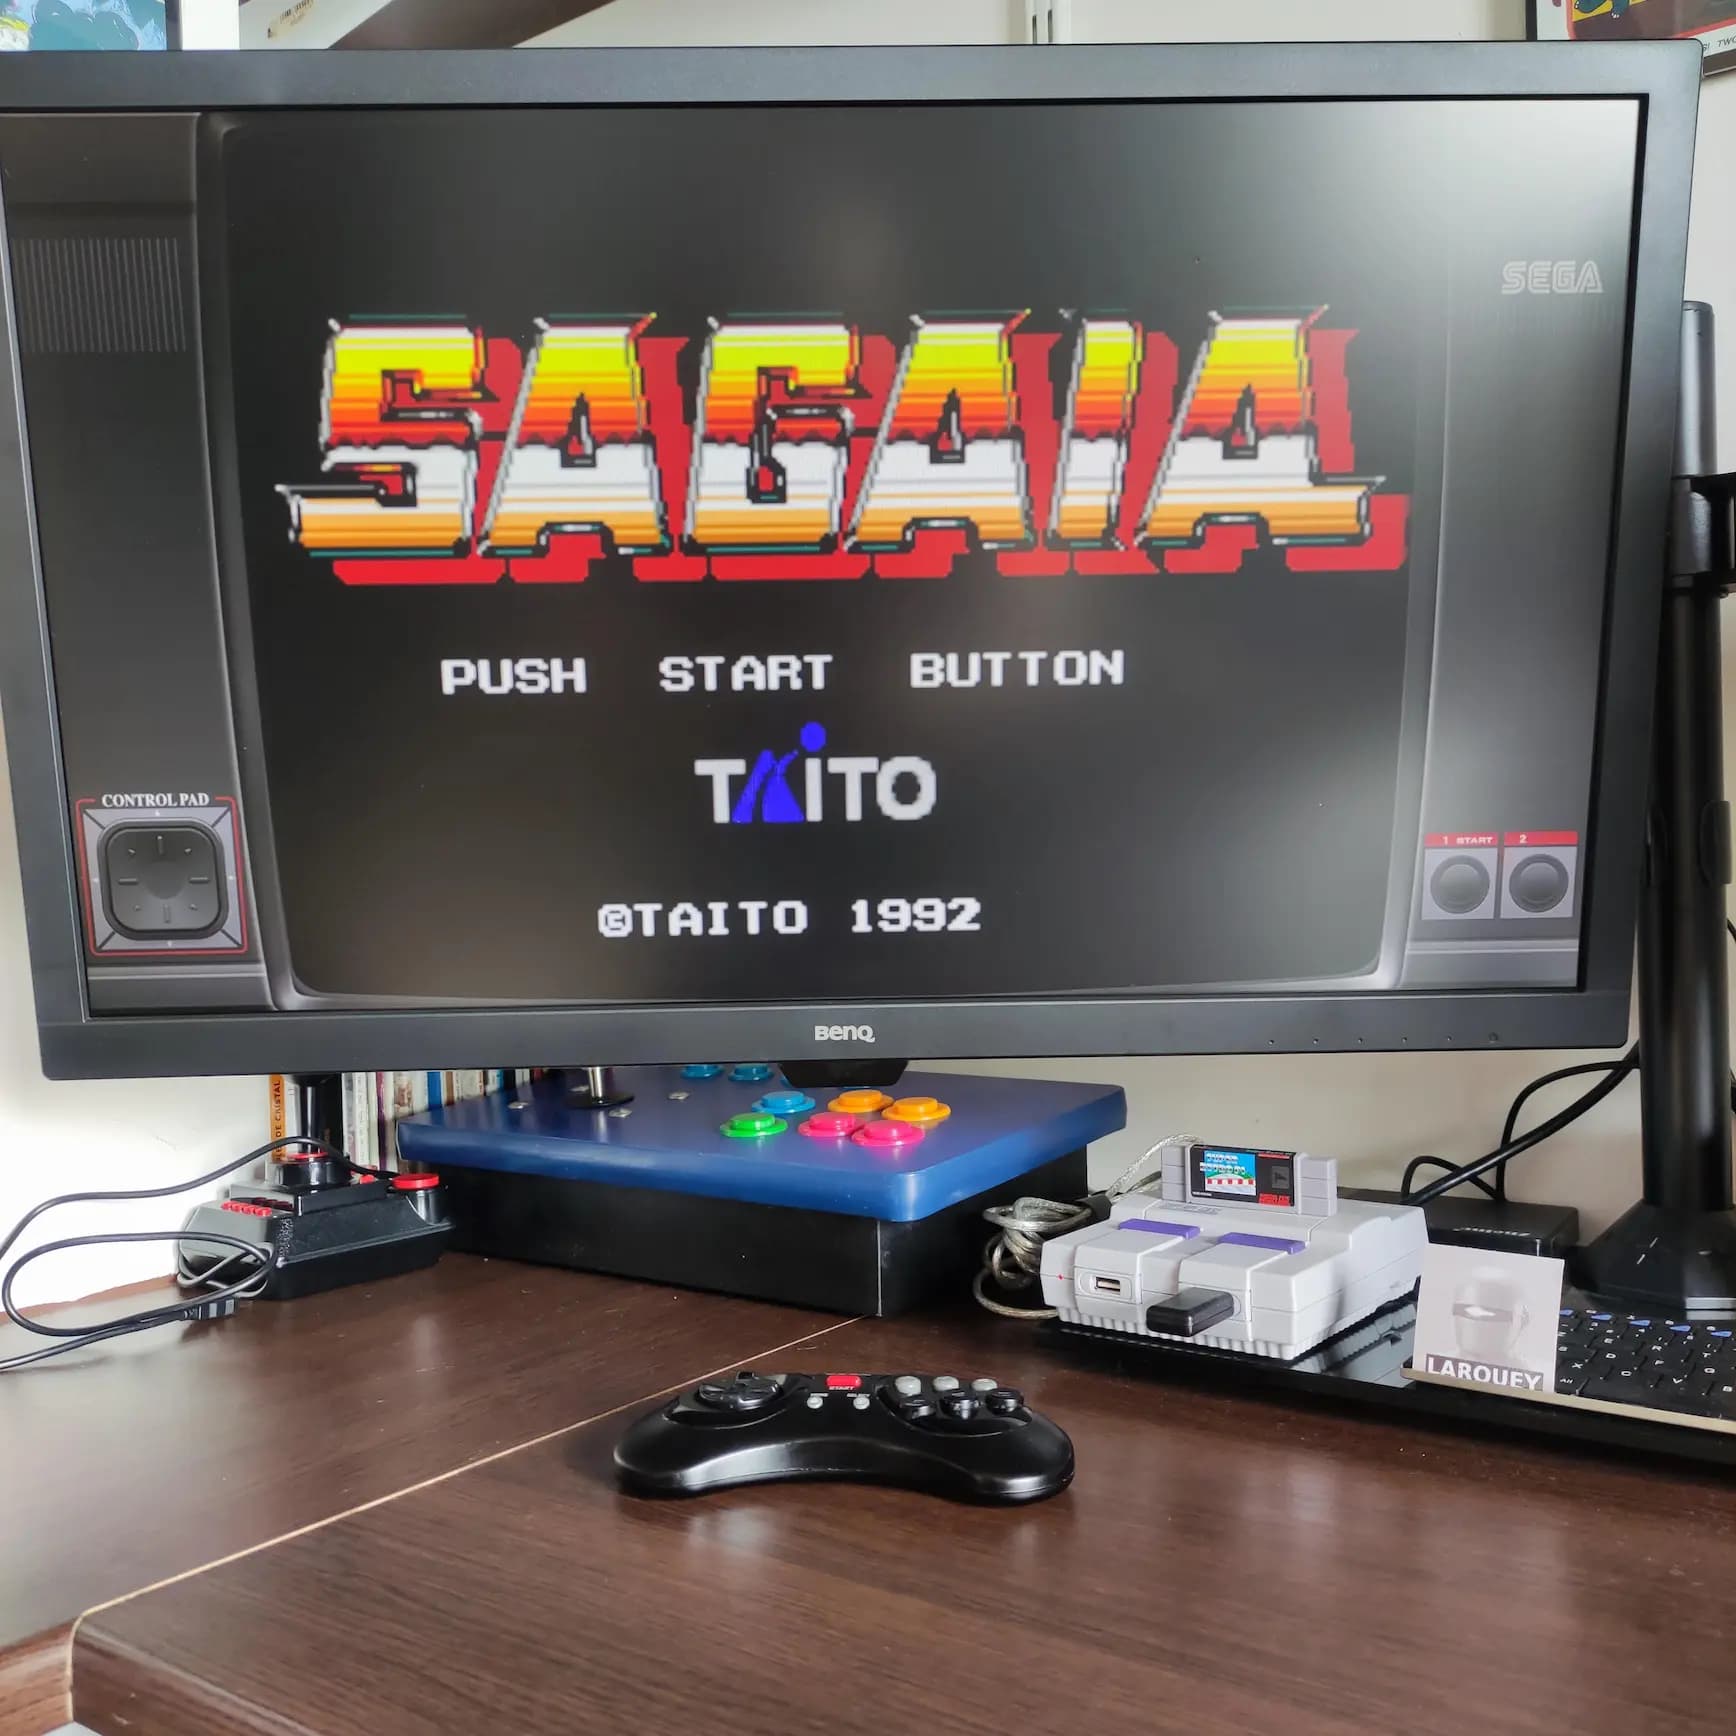 Larquey: Sagaia (Sega Master System Emulated) 120,800 points on 2022-07-27 10:40:51